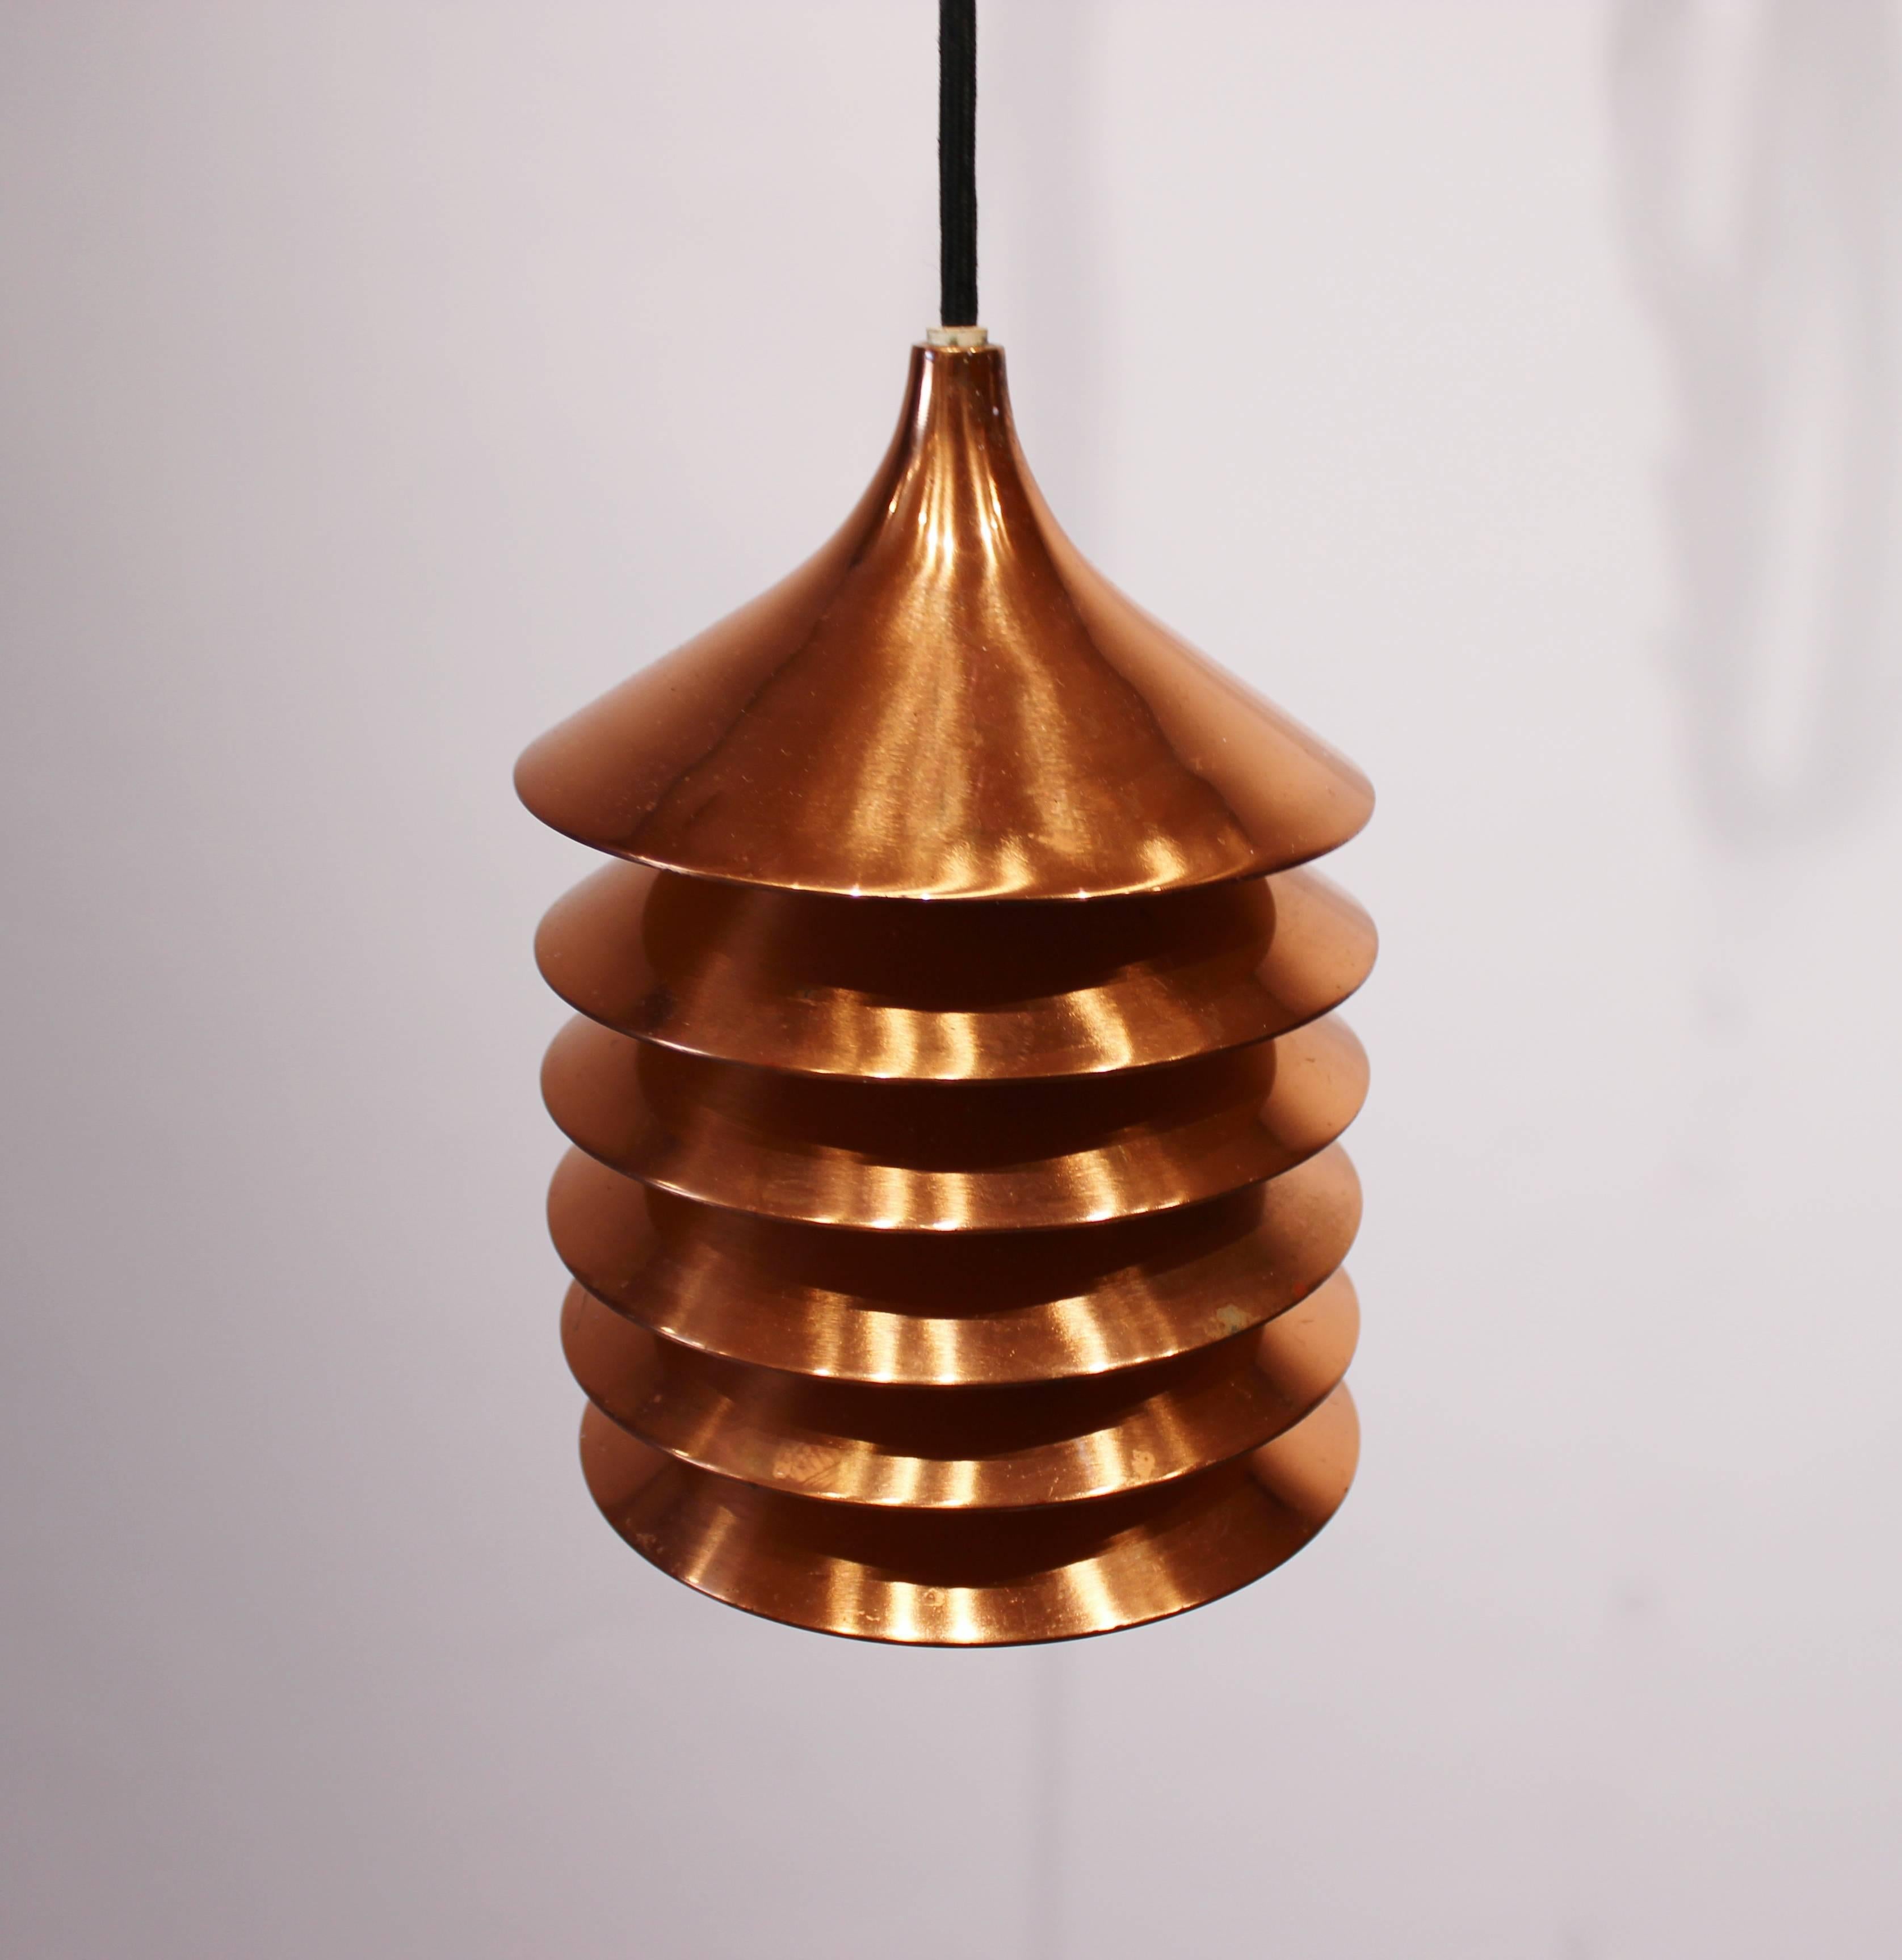 Scandinavian Modern Pair of Copper Pendants of Danish Design from the 1960s For Sale